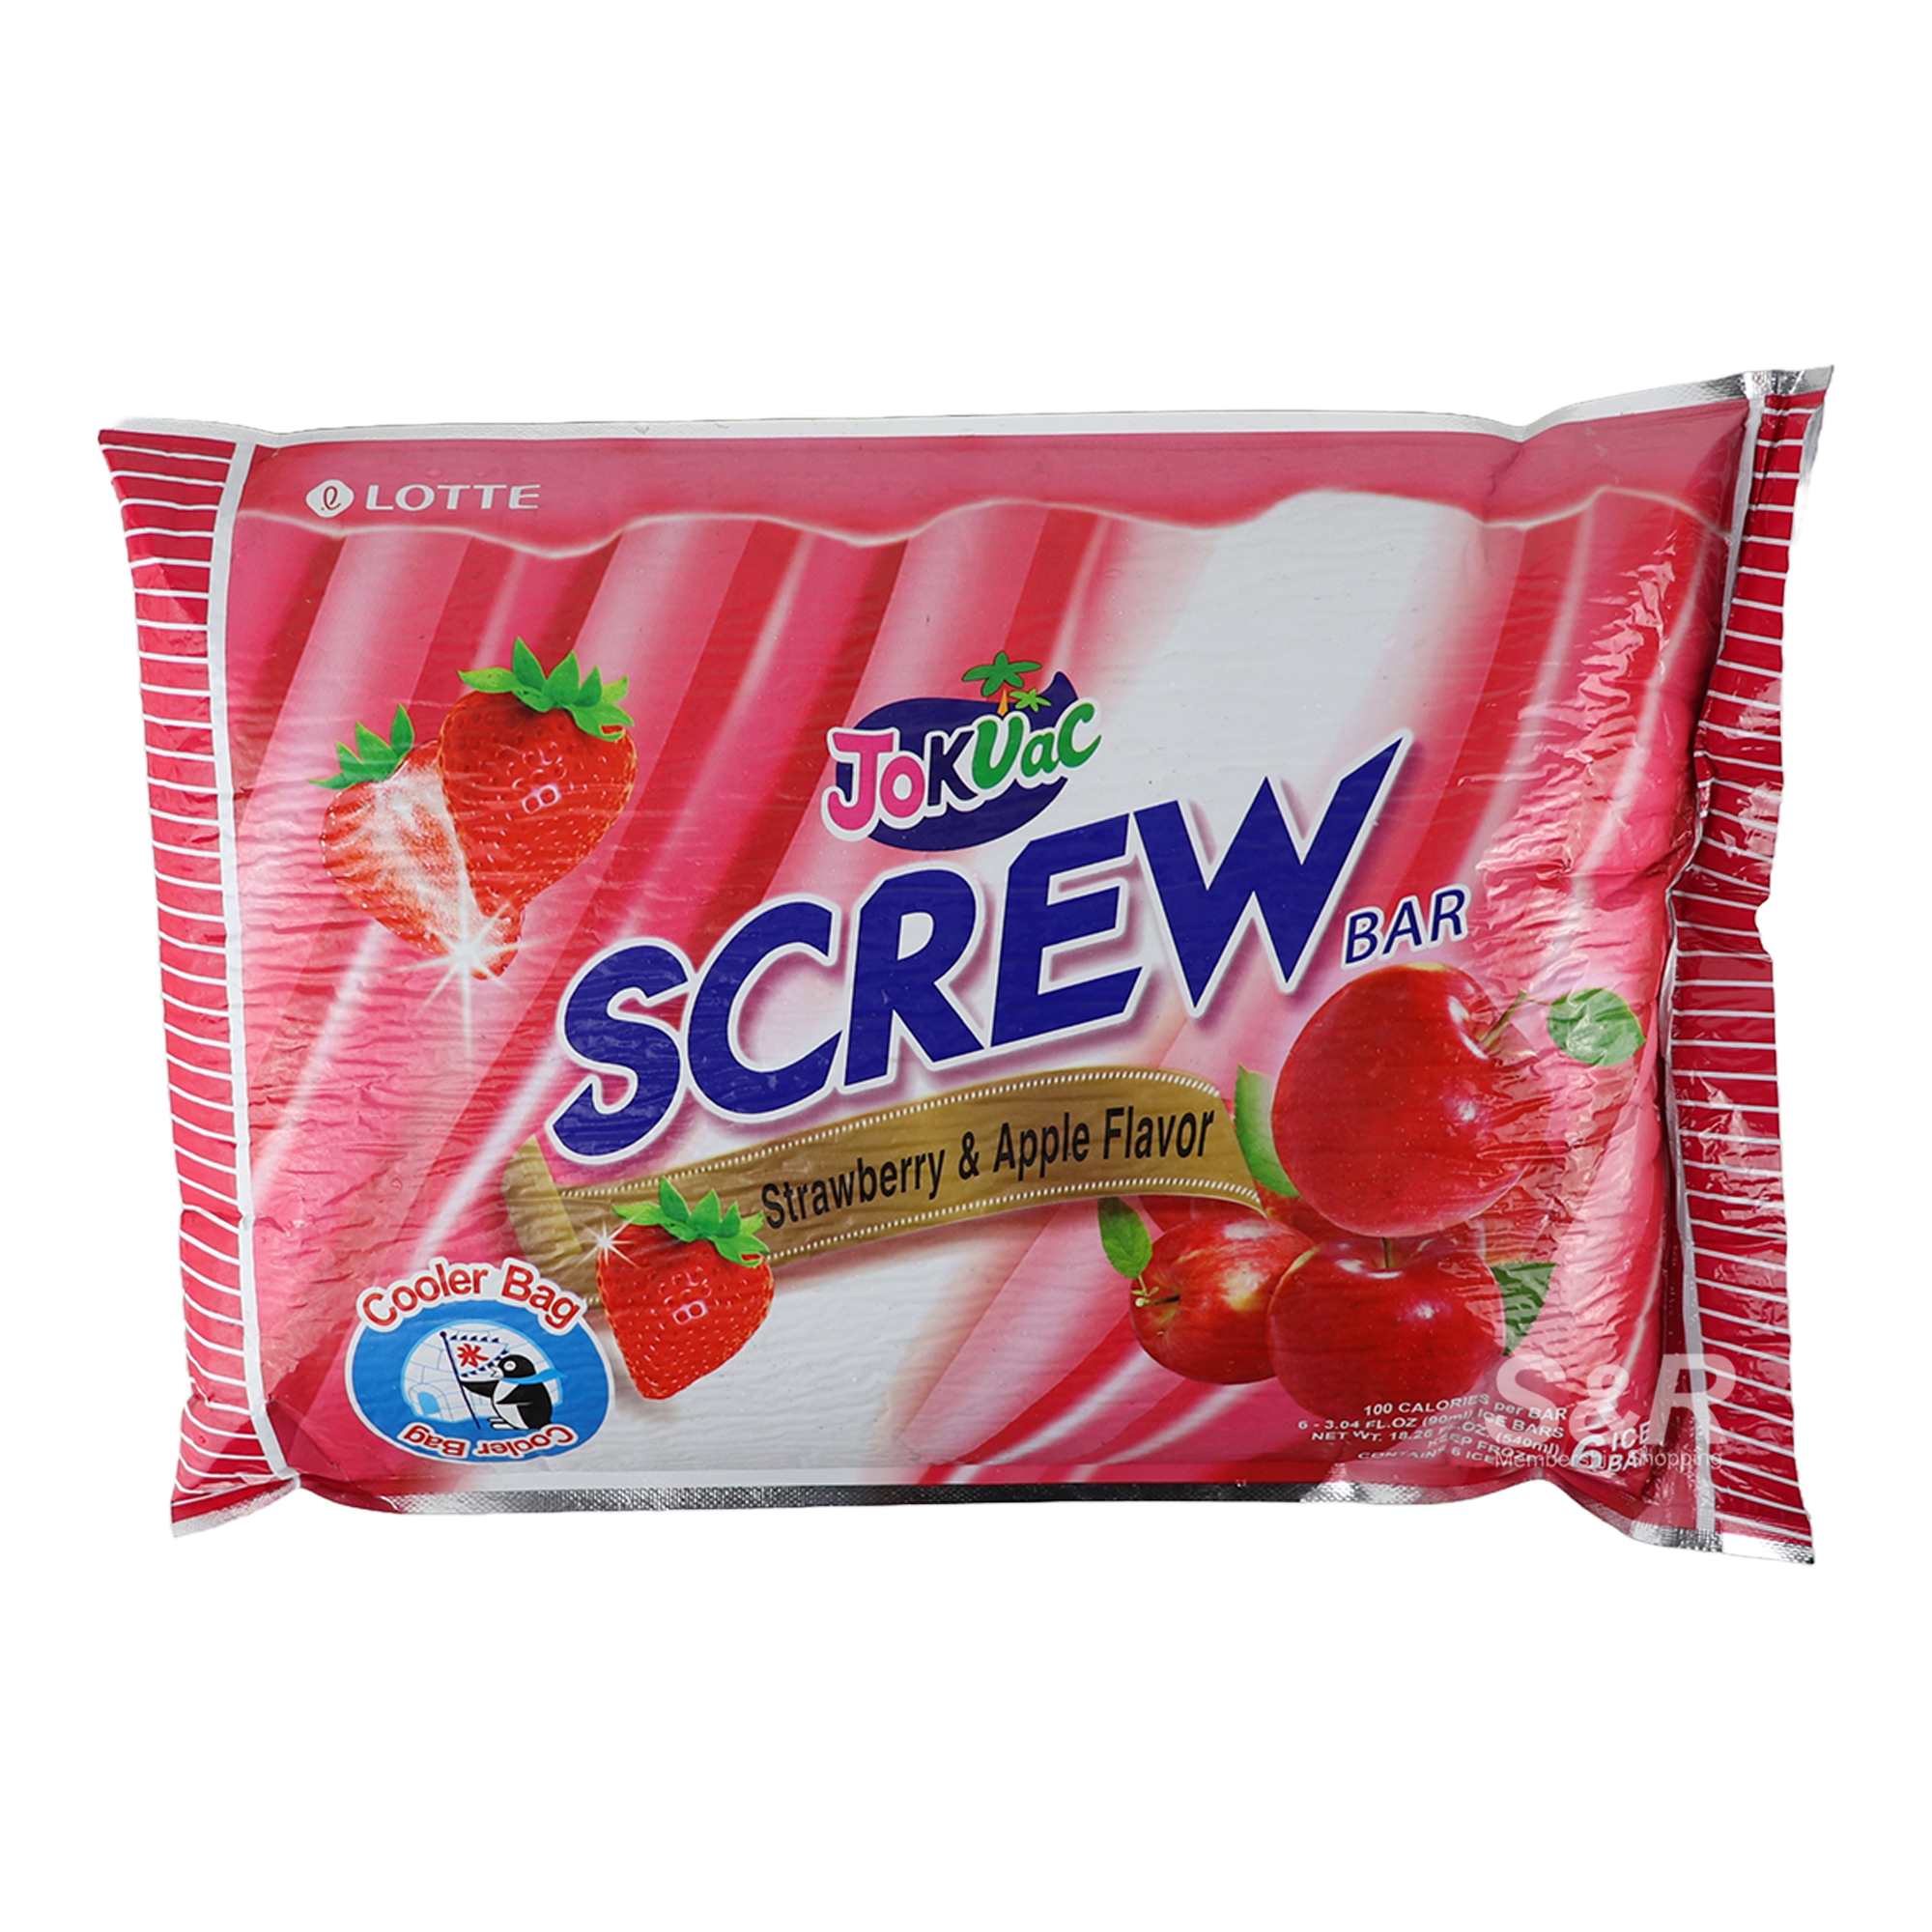 Lotte JokVac Screw Bar Strawberry and Apple Flavor 6pcs